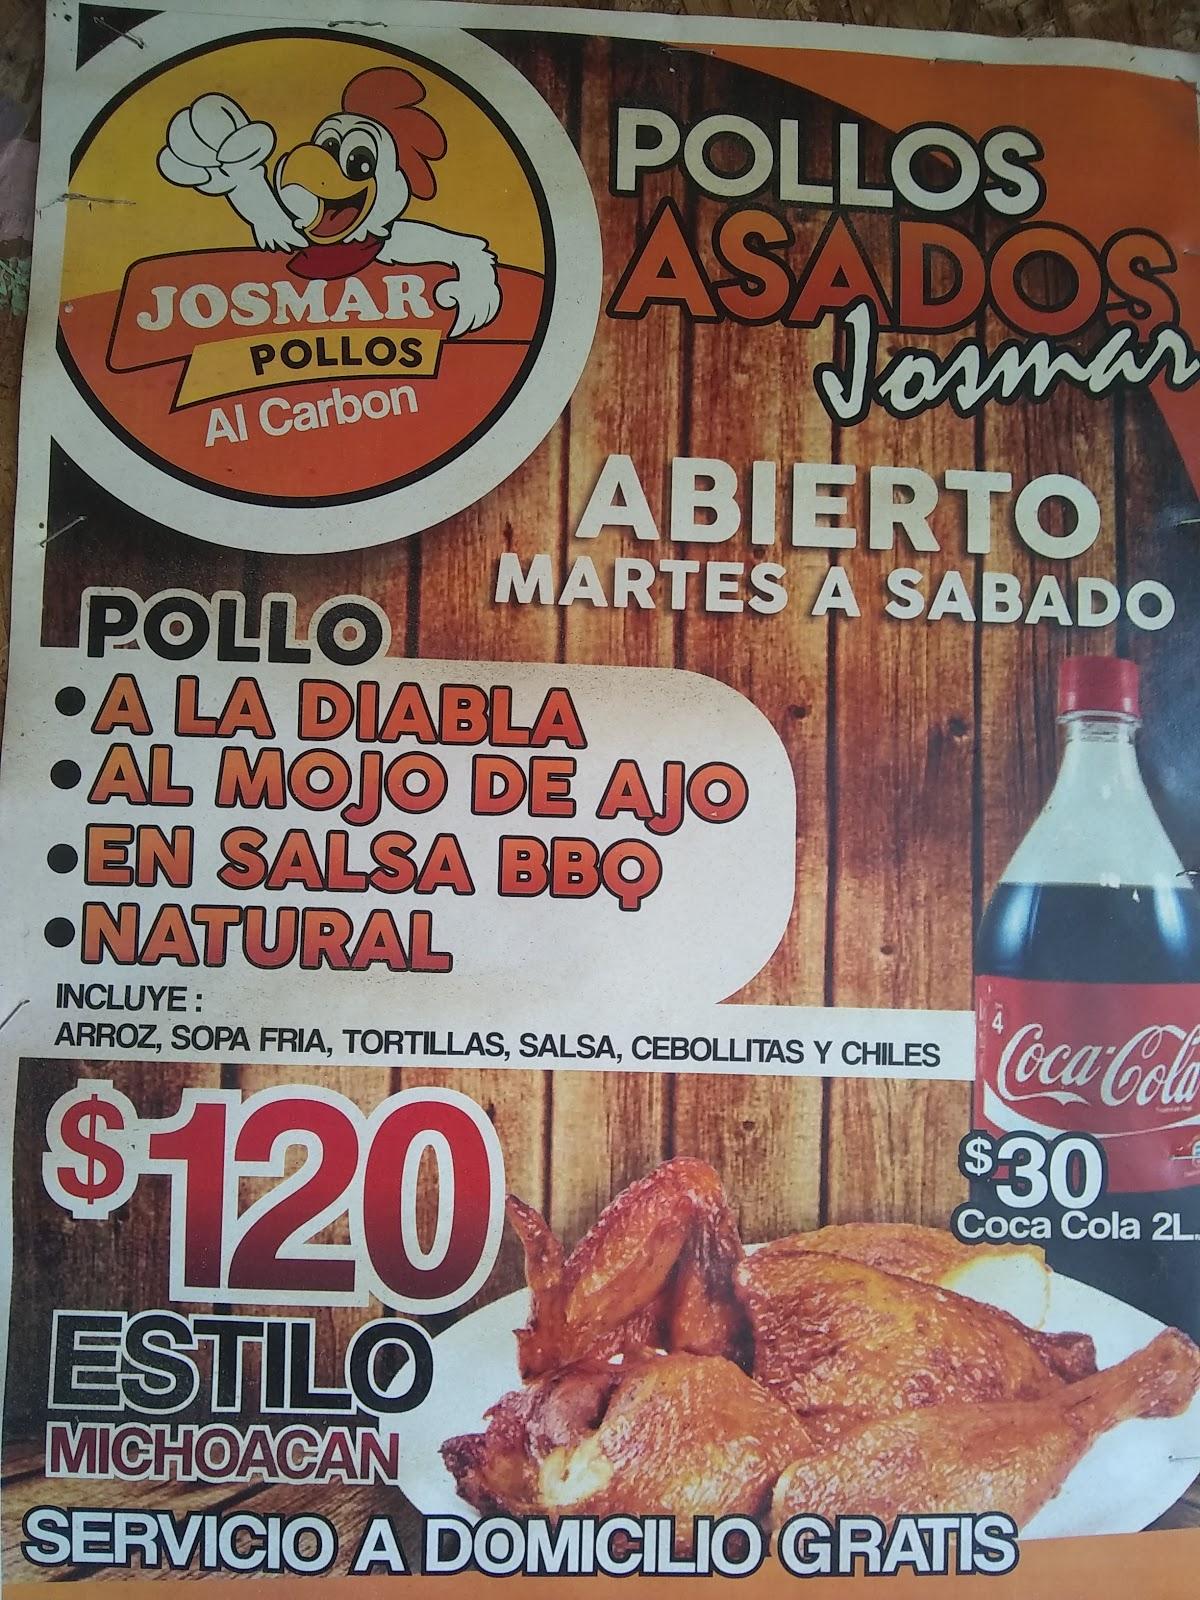 Pollos Asados Josmar restaurant, Tijuana